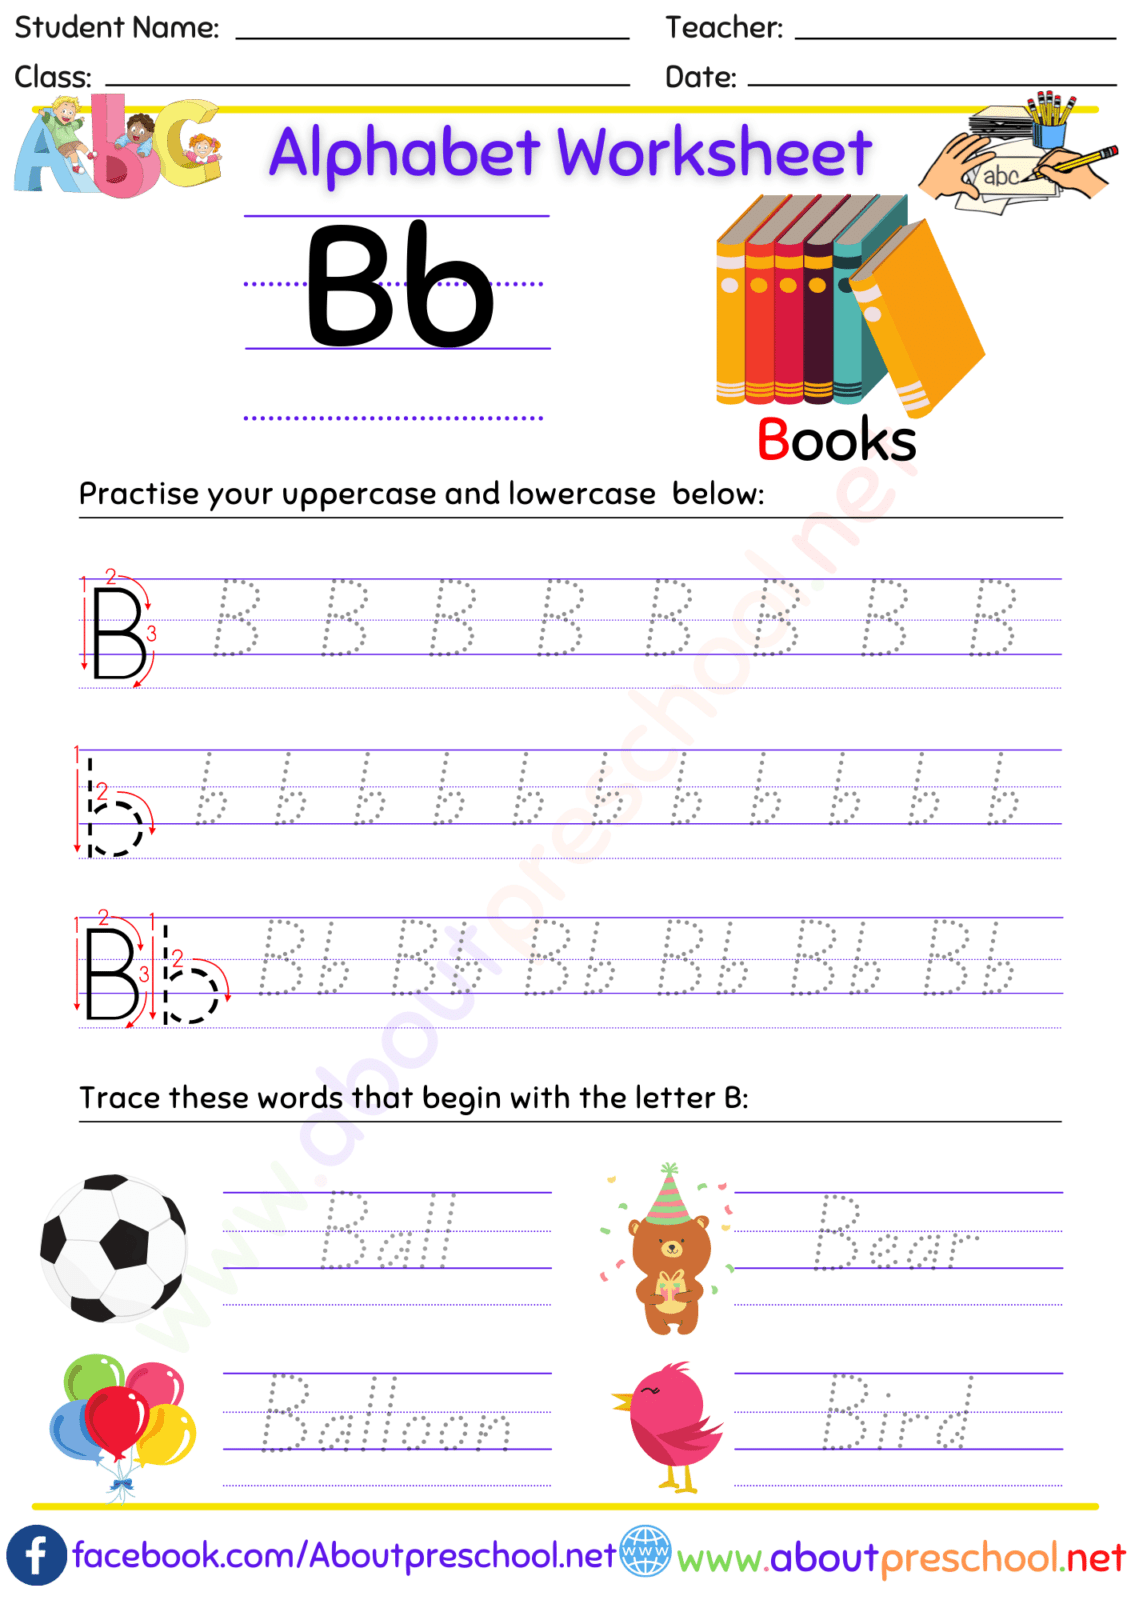 The Alphabet Worksheets-B